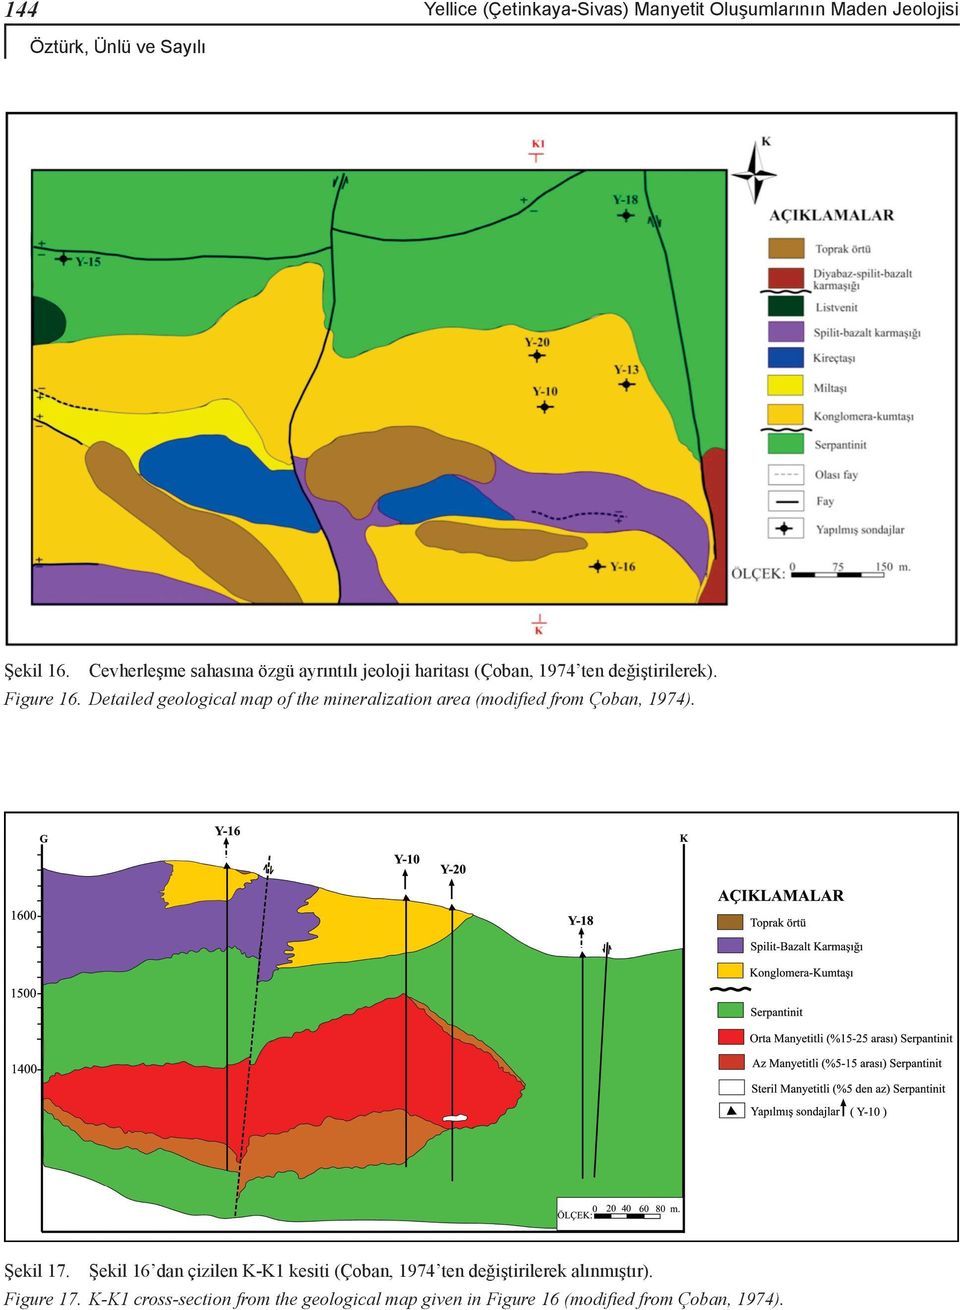 Detailed geological map of the mineralization area (modified from Çoban, 1974). Şekil 17.